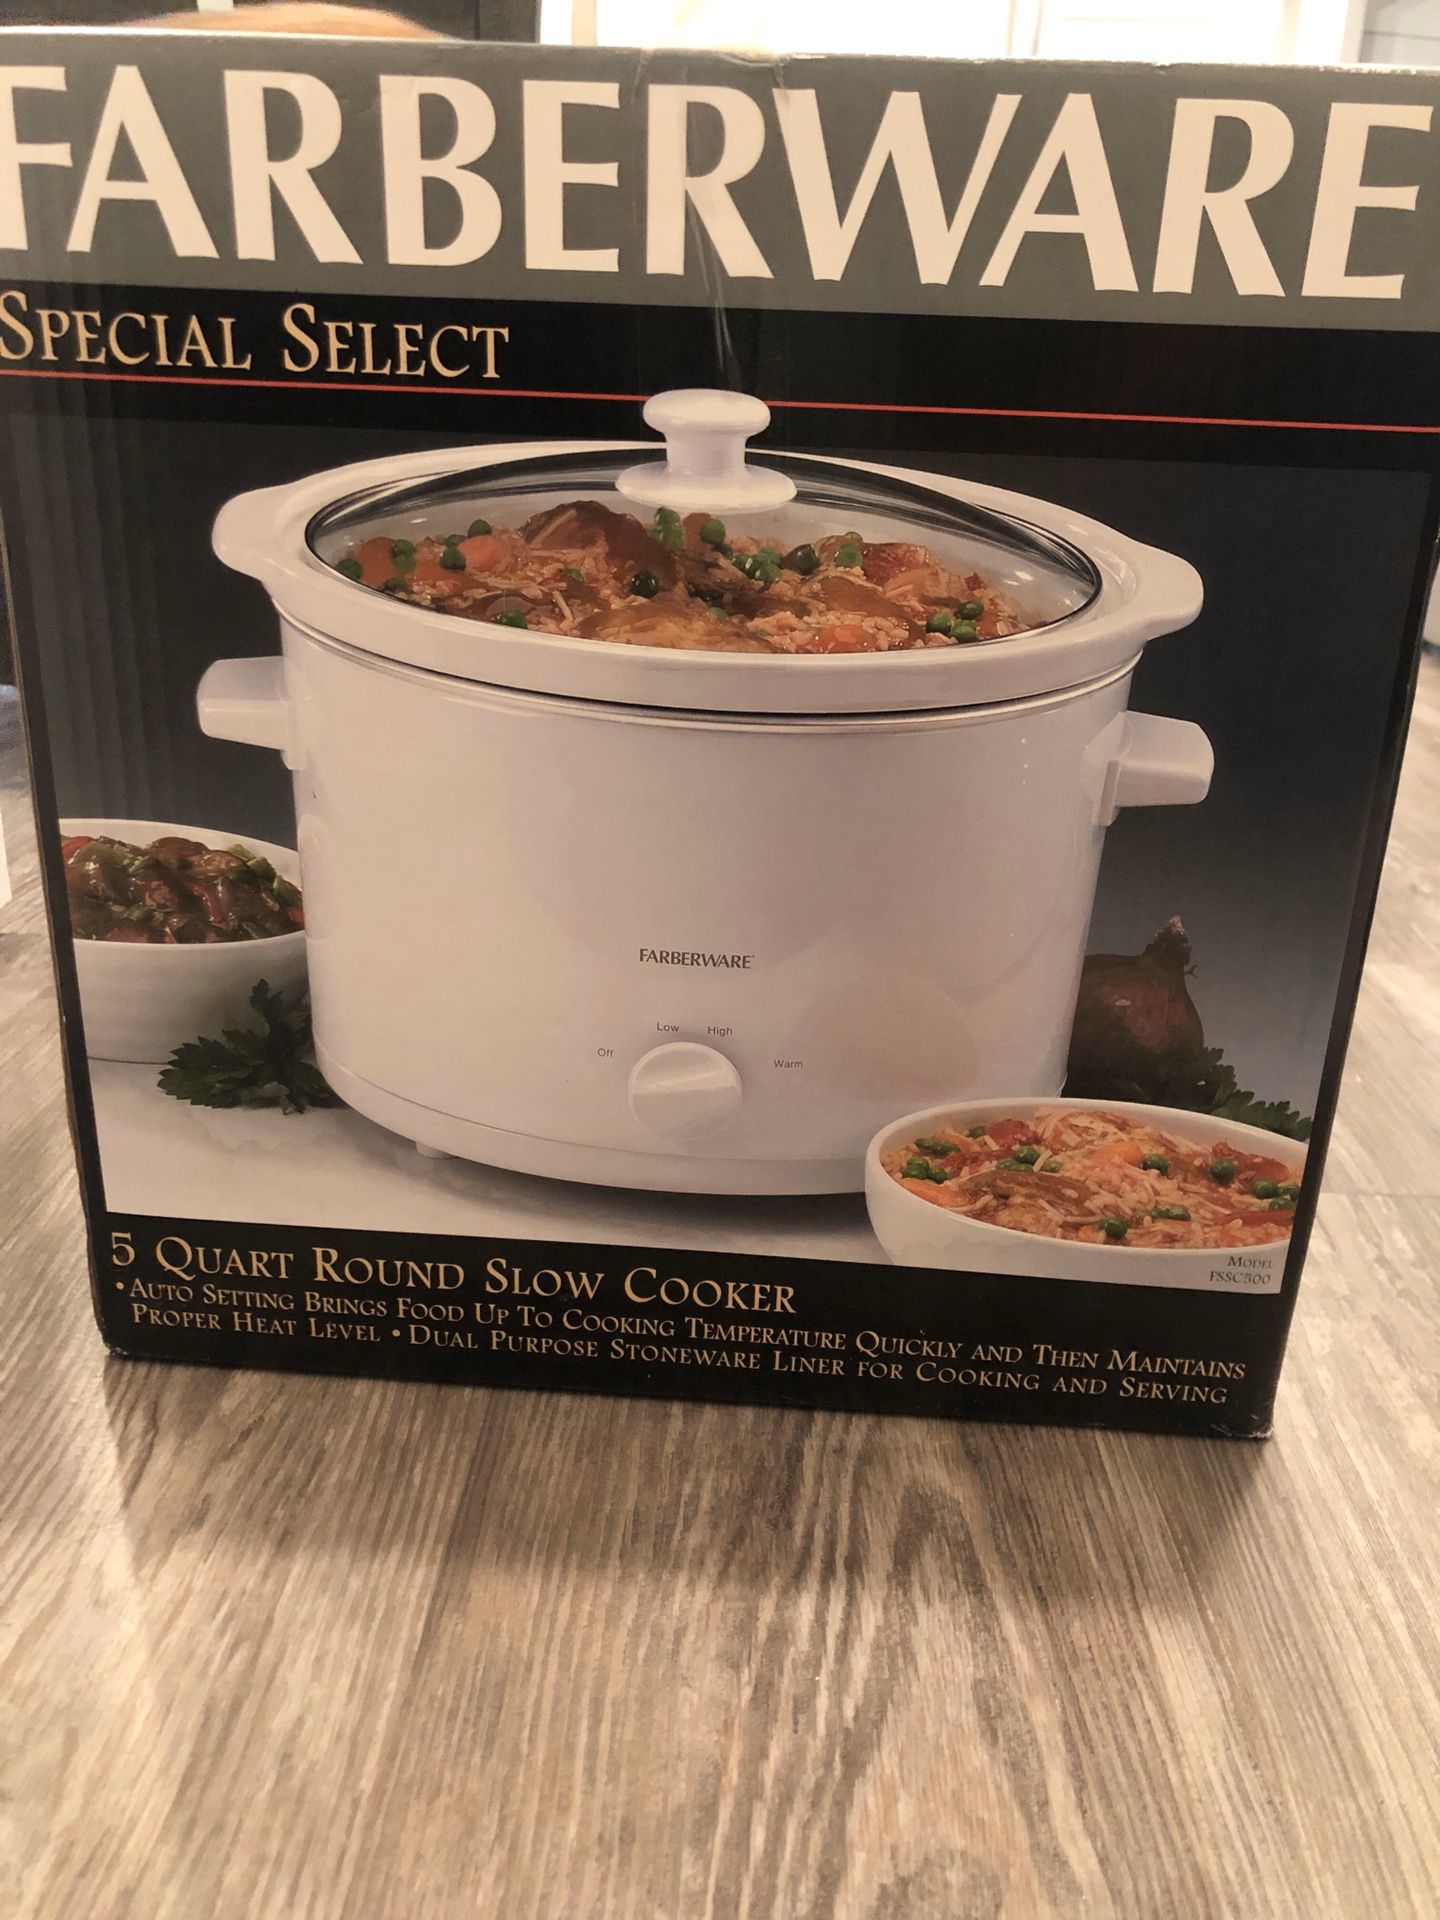 Faberware crock pot